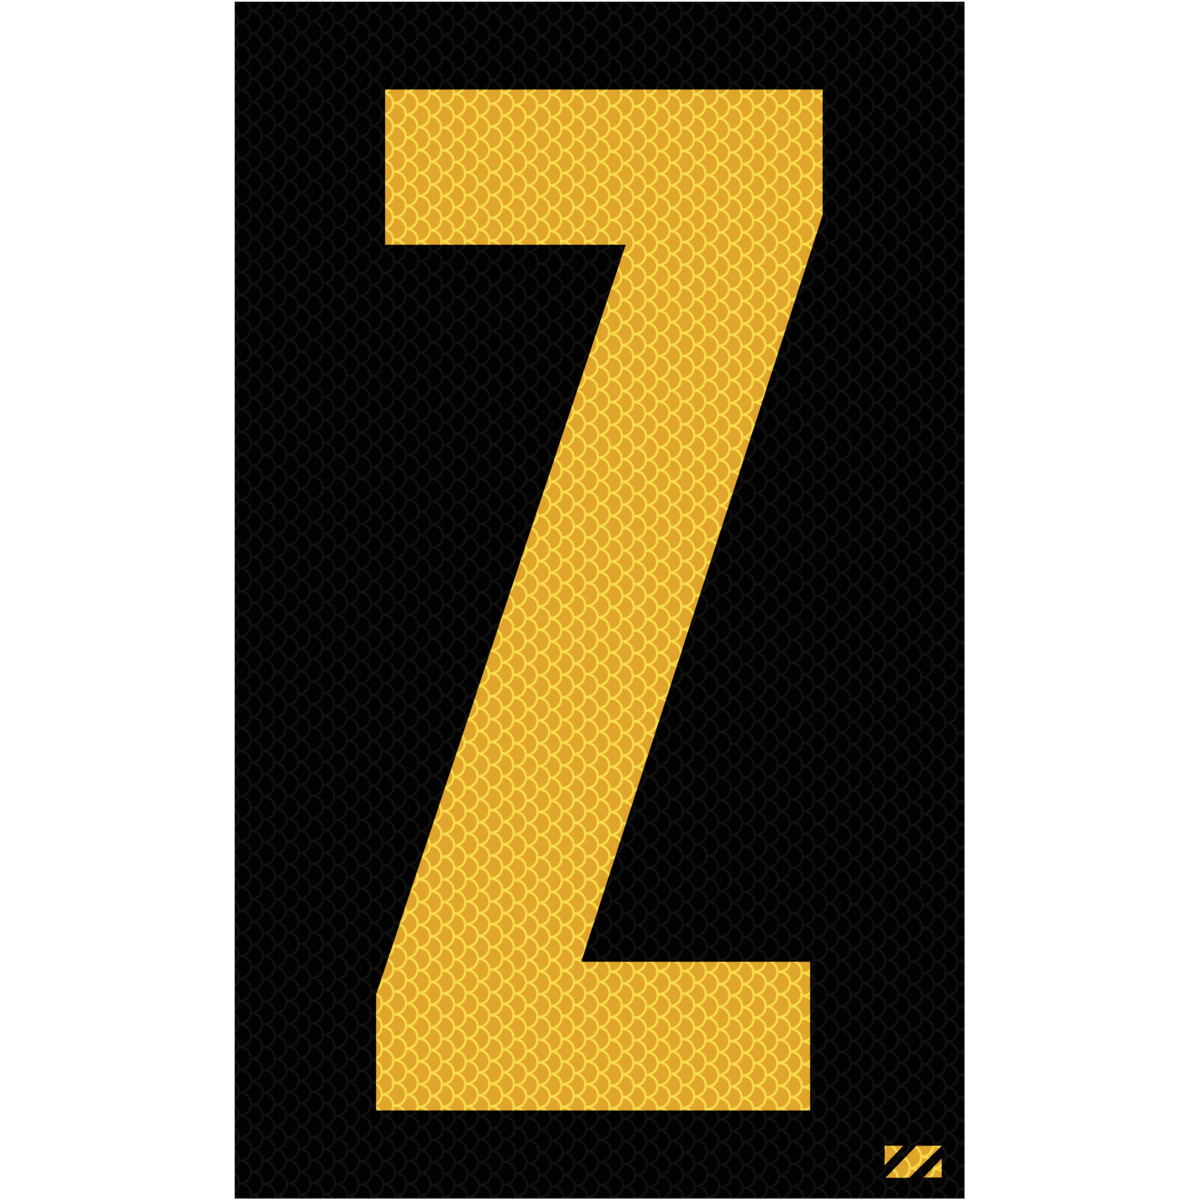 2.5" Yellow on Black High Intensity Reflective "Z"